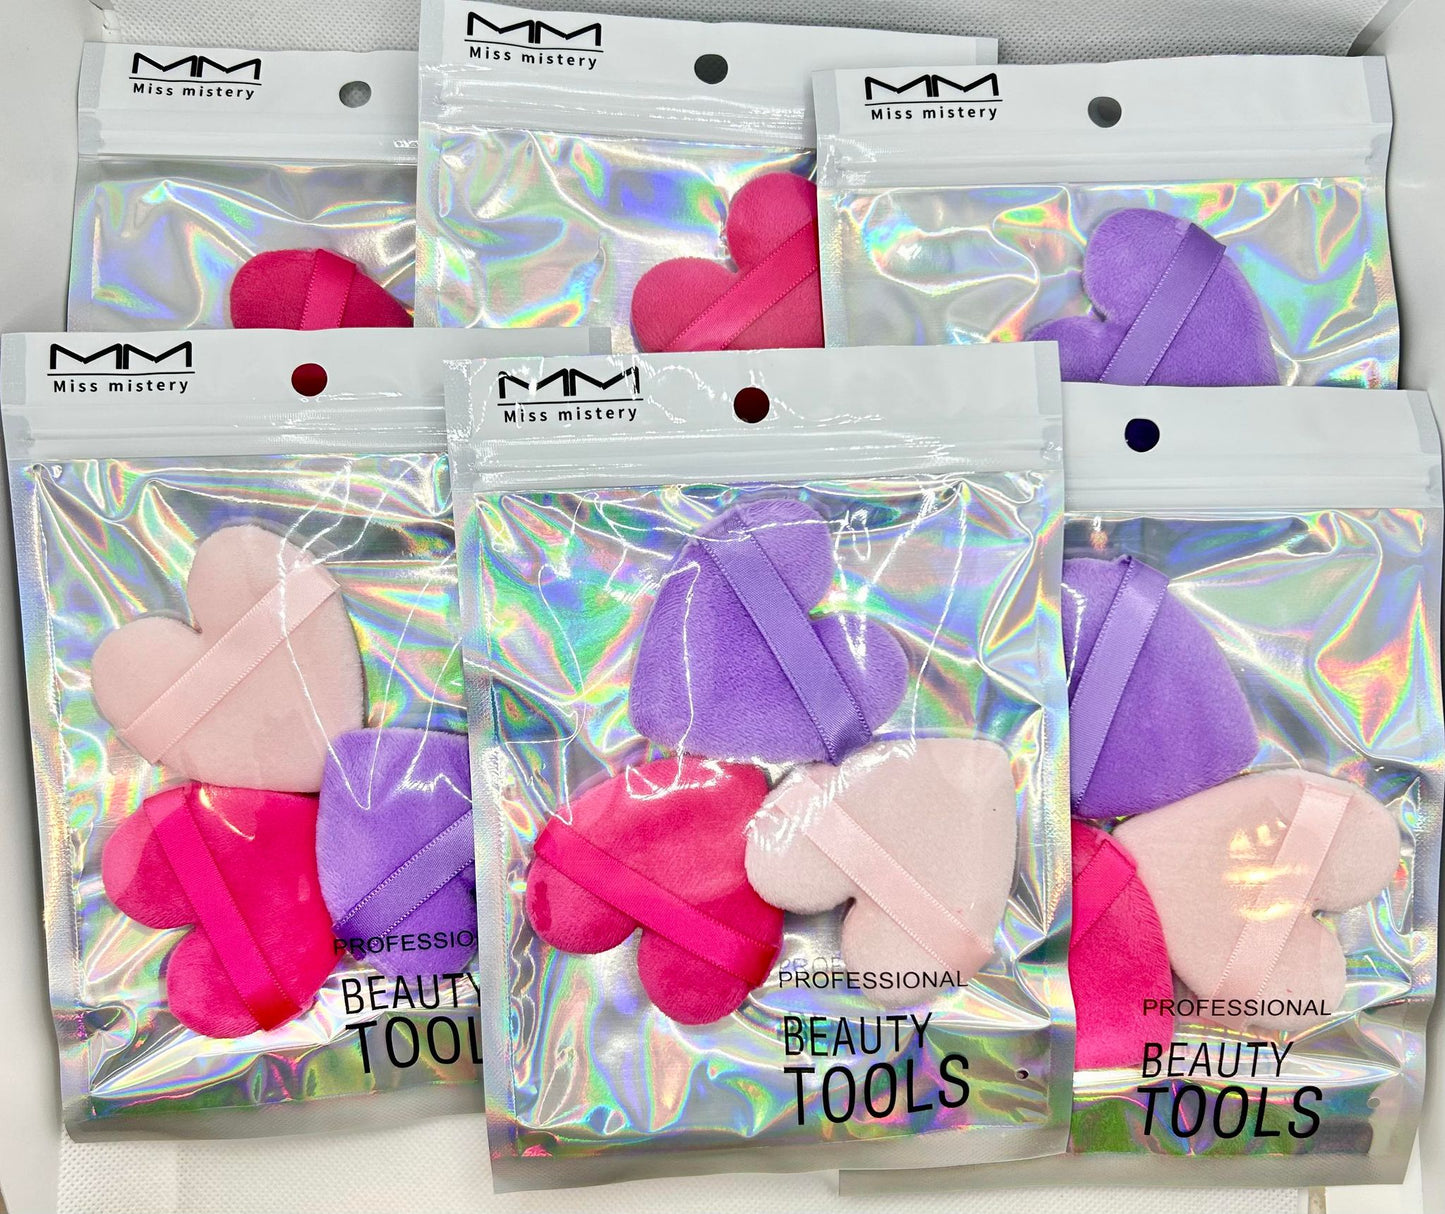 Heart Beauty Makeup Sponge Packs (Dozen)